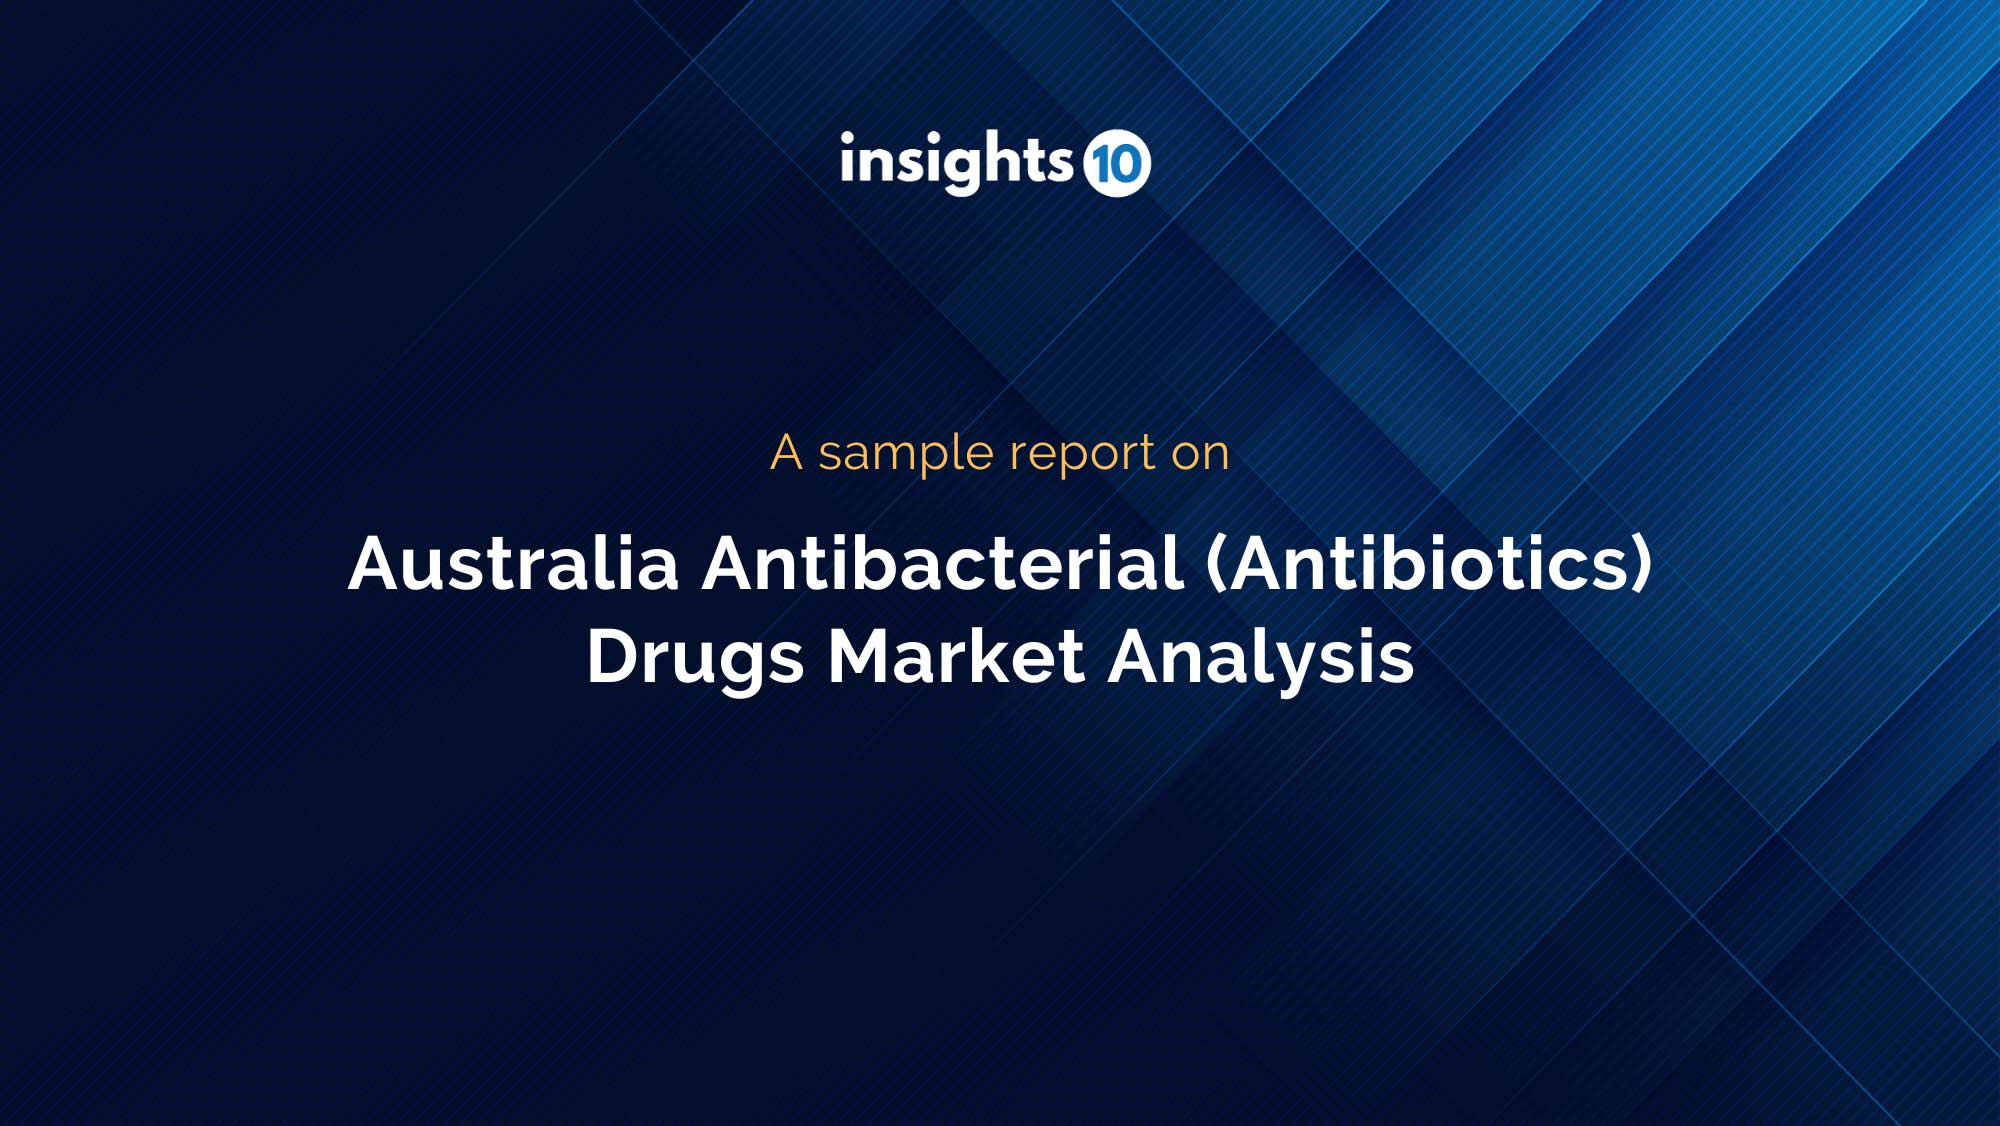 Australia Antibacterial (Antibiotics) Drugs Market Analysis Sample Report 